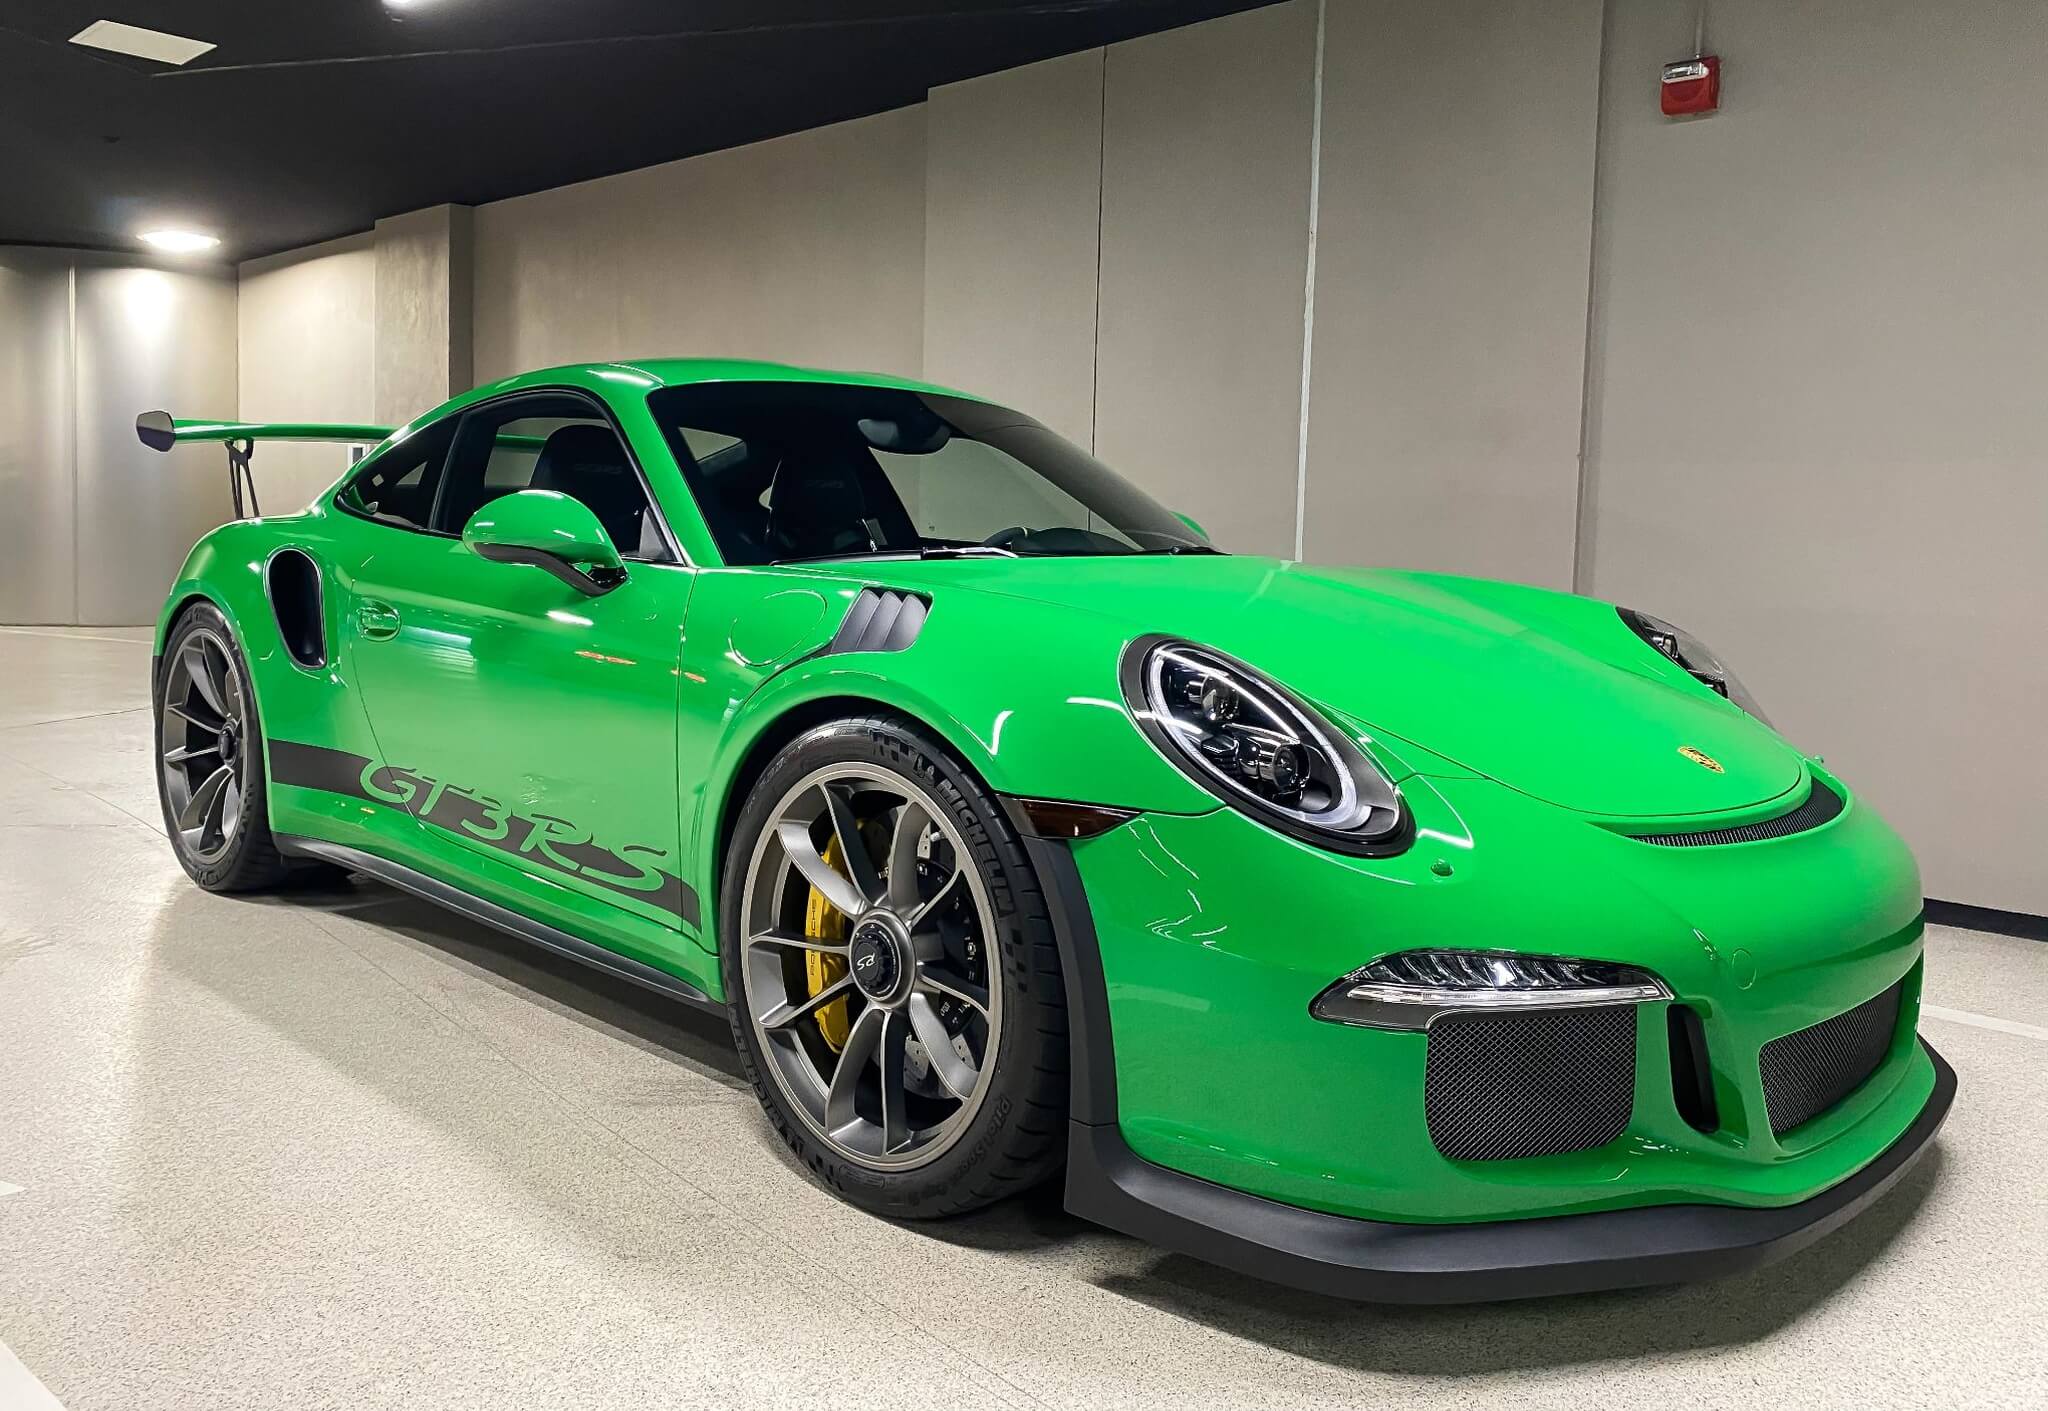 Viper green. Porsche 911 Classic Green. Porsche 991 зеленый цвет салон. Випер Грин. Черно зеленый Порше Спайдер.